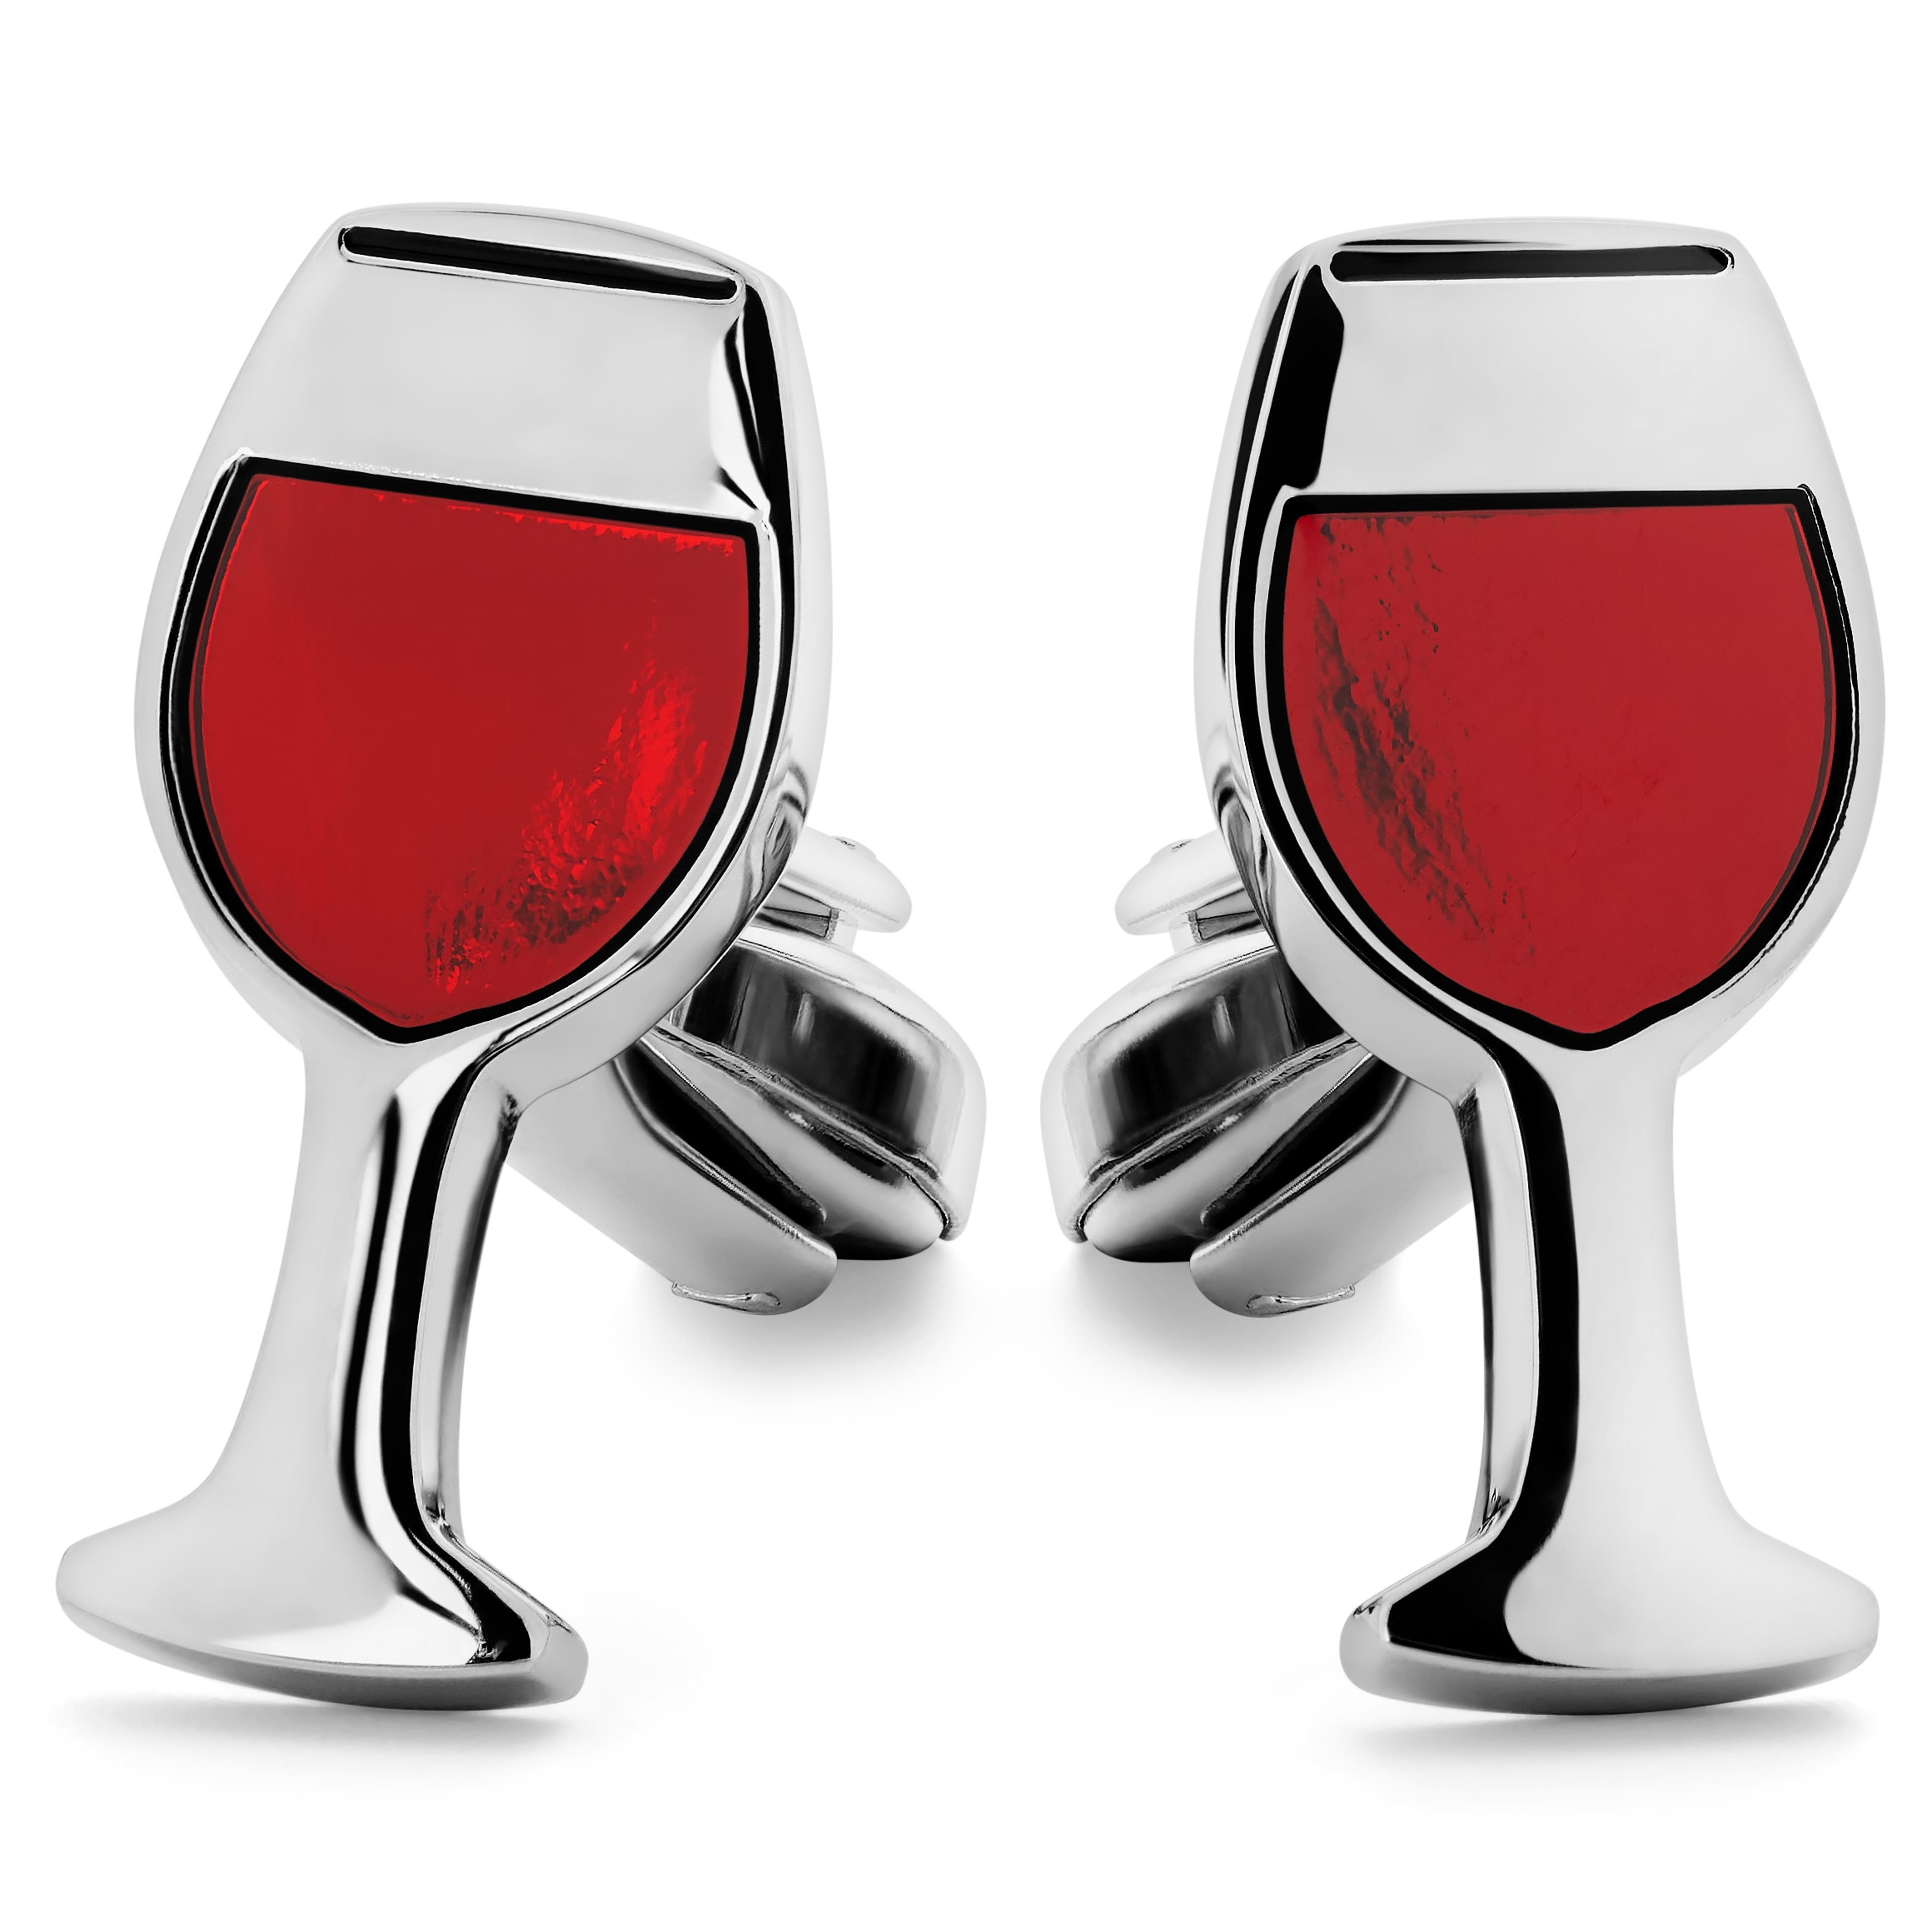 Flaviant | Ασημί & Κόκκινα Μανικετόκουμπα Ποτήρι Κρασιού